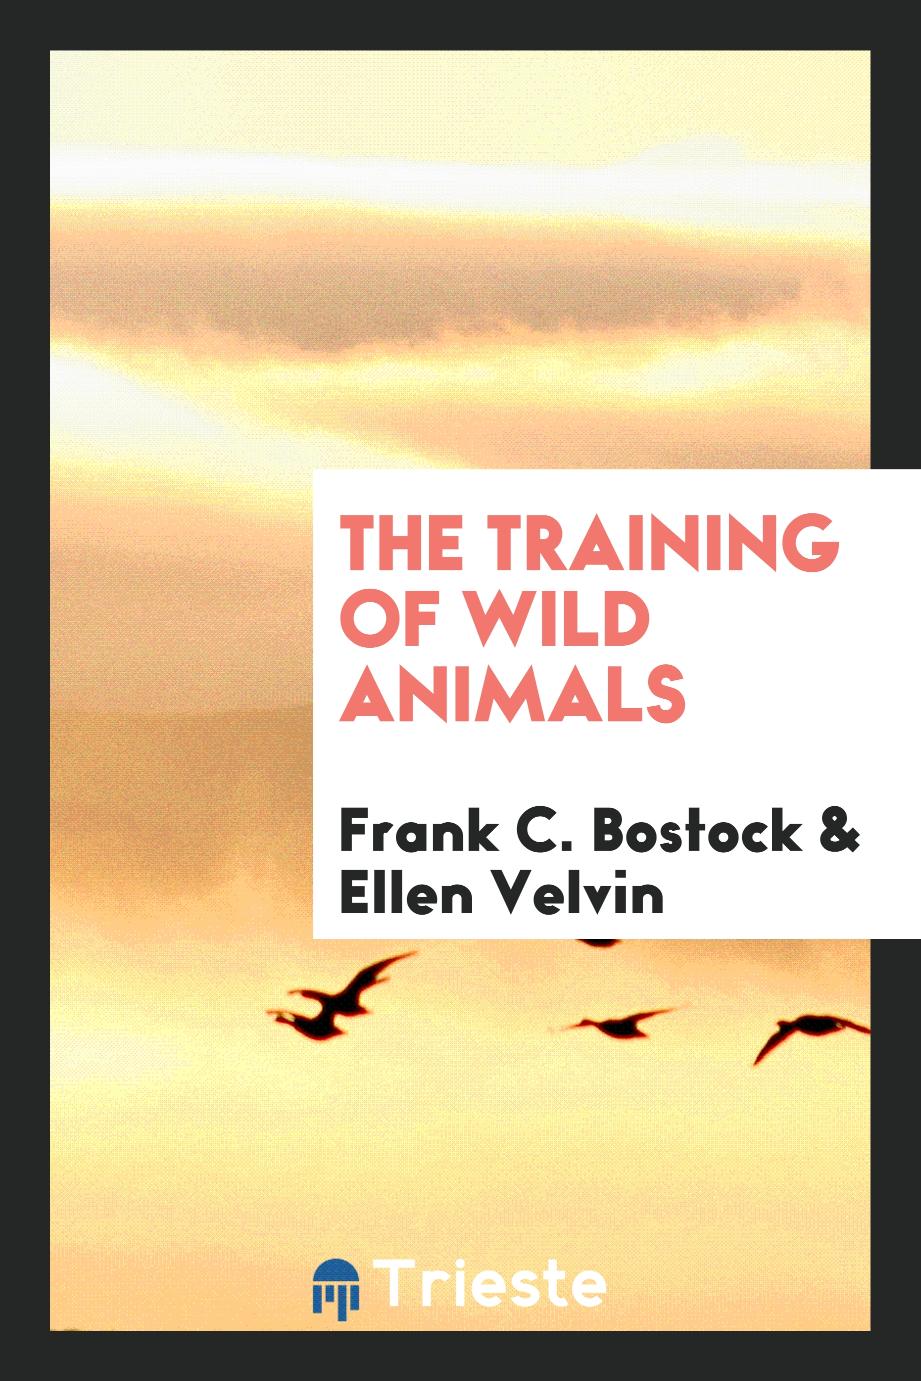 The training of wild animals